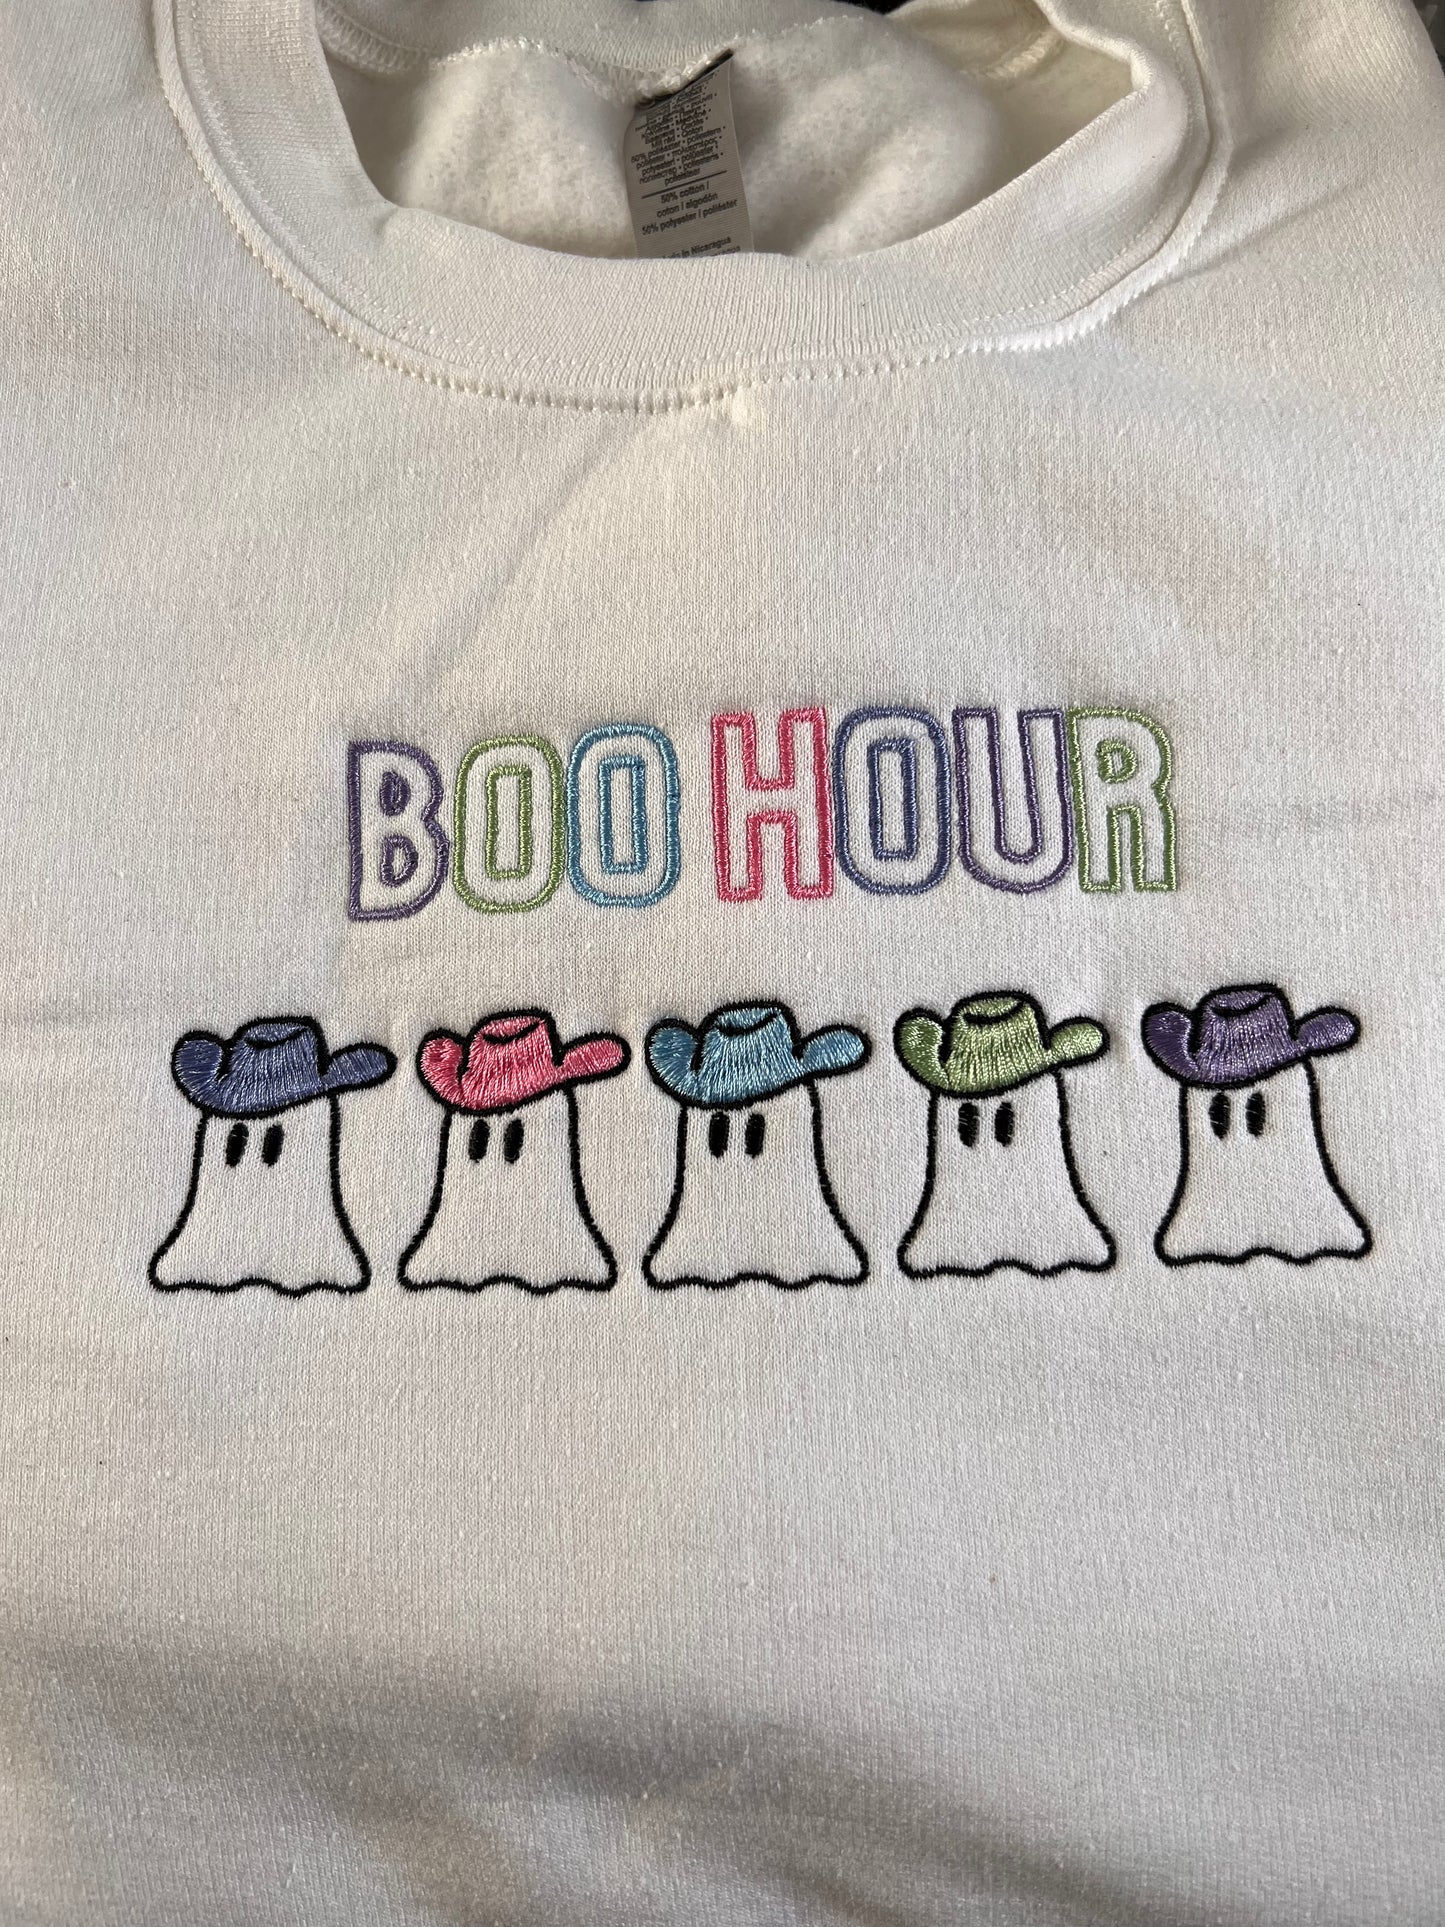 TXT Boo Hour Sweatshirt